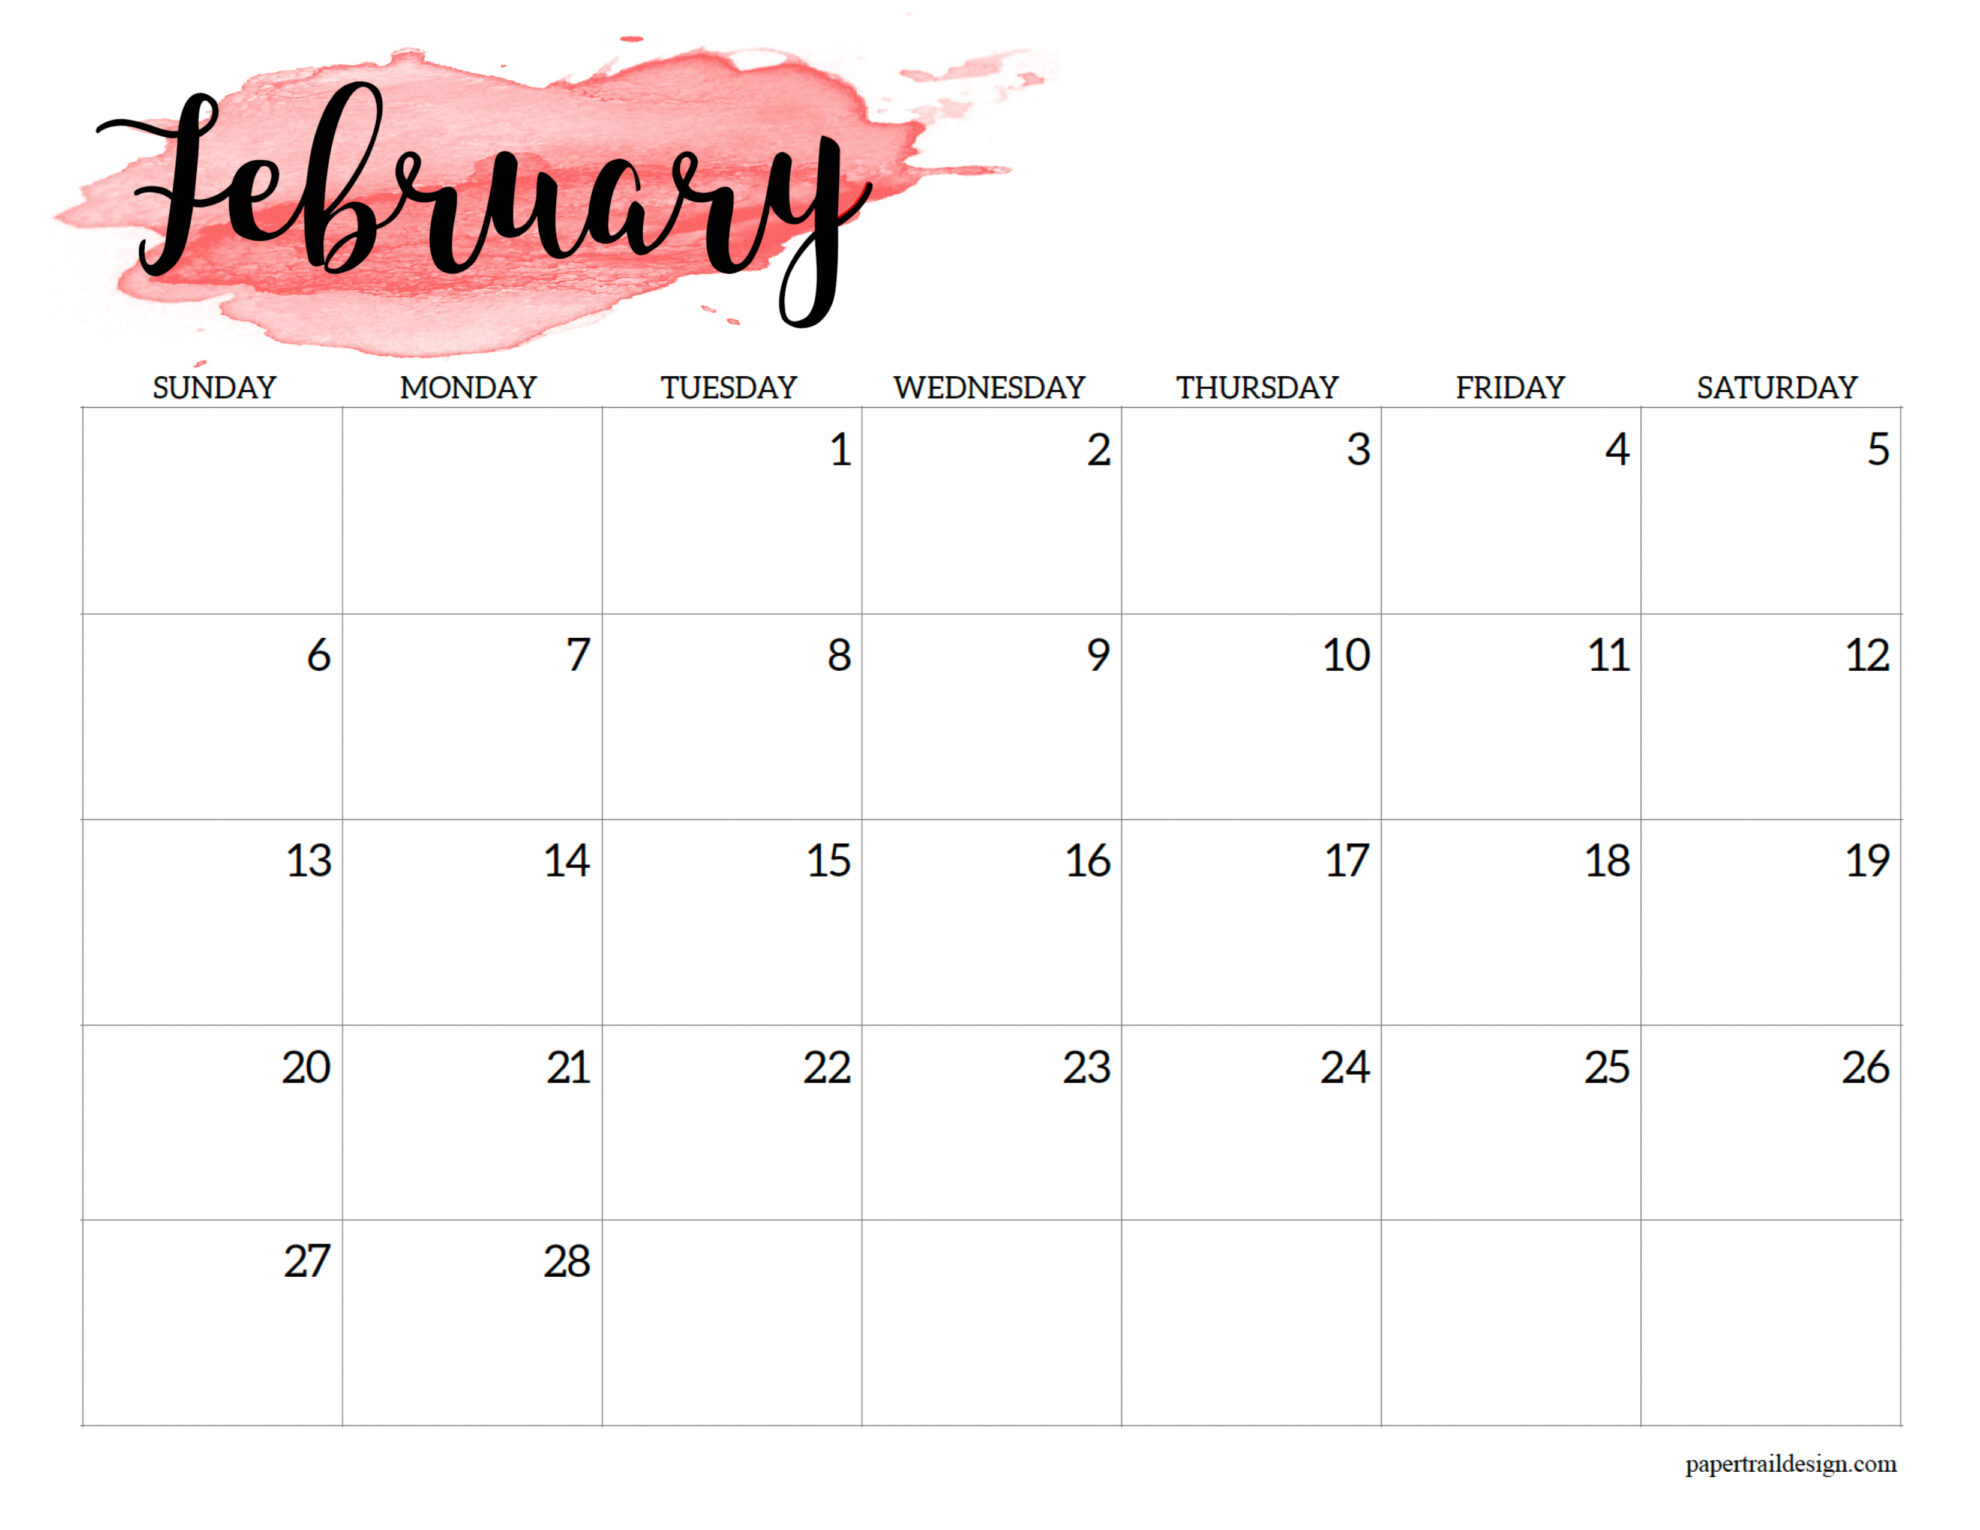 February Printable Calendar 2022 2022 Calendar Printable - Watercolor - Paper Trail Design